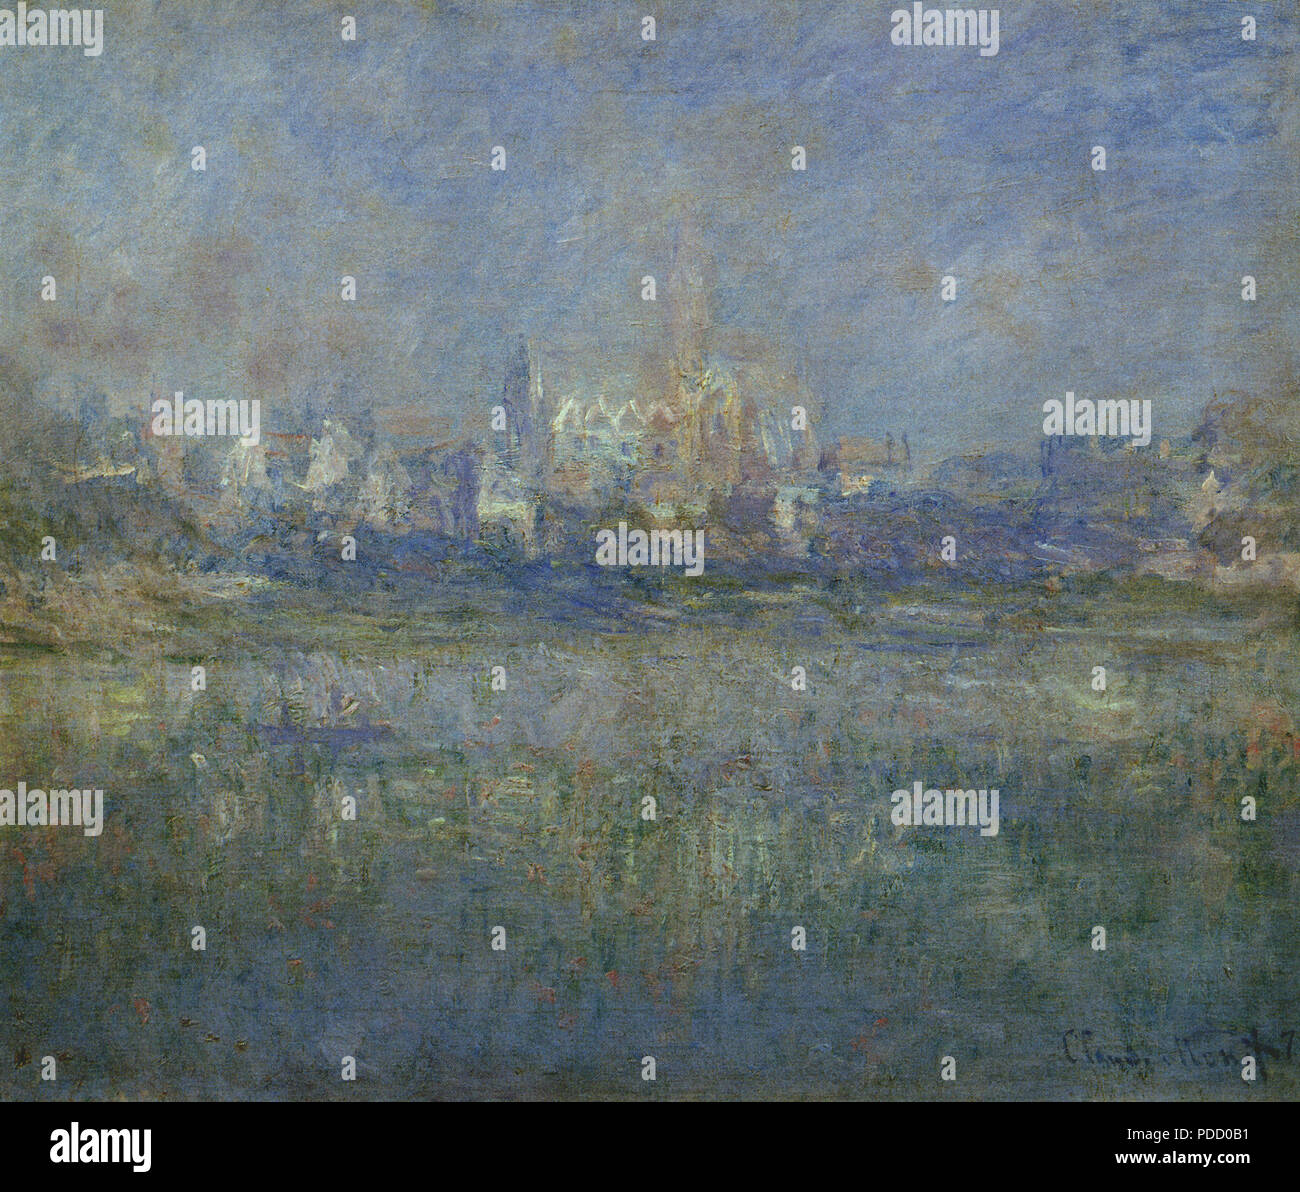 Vetheuil in the Fog, Monet, Claude, 1879. Stock Photo